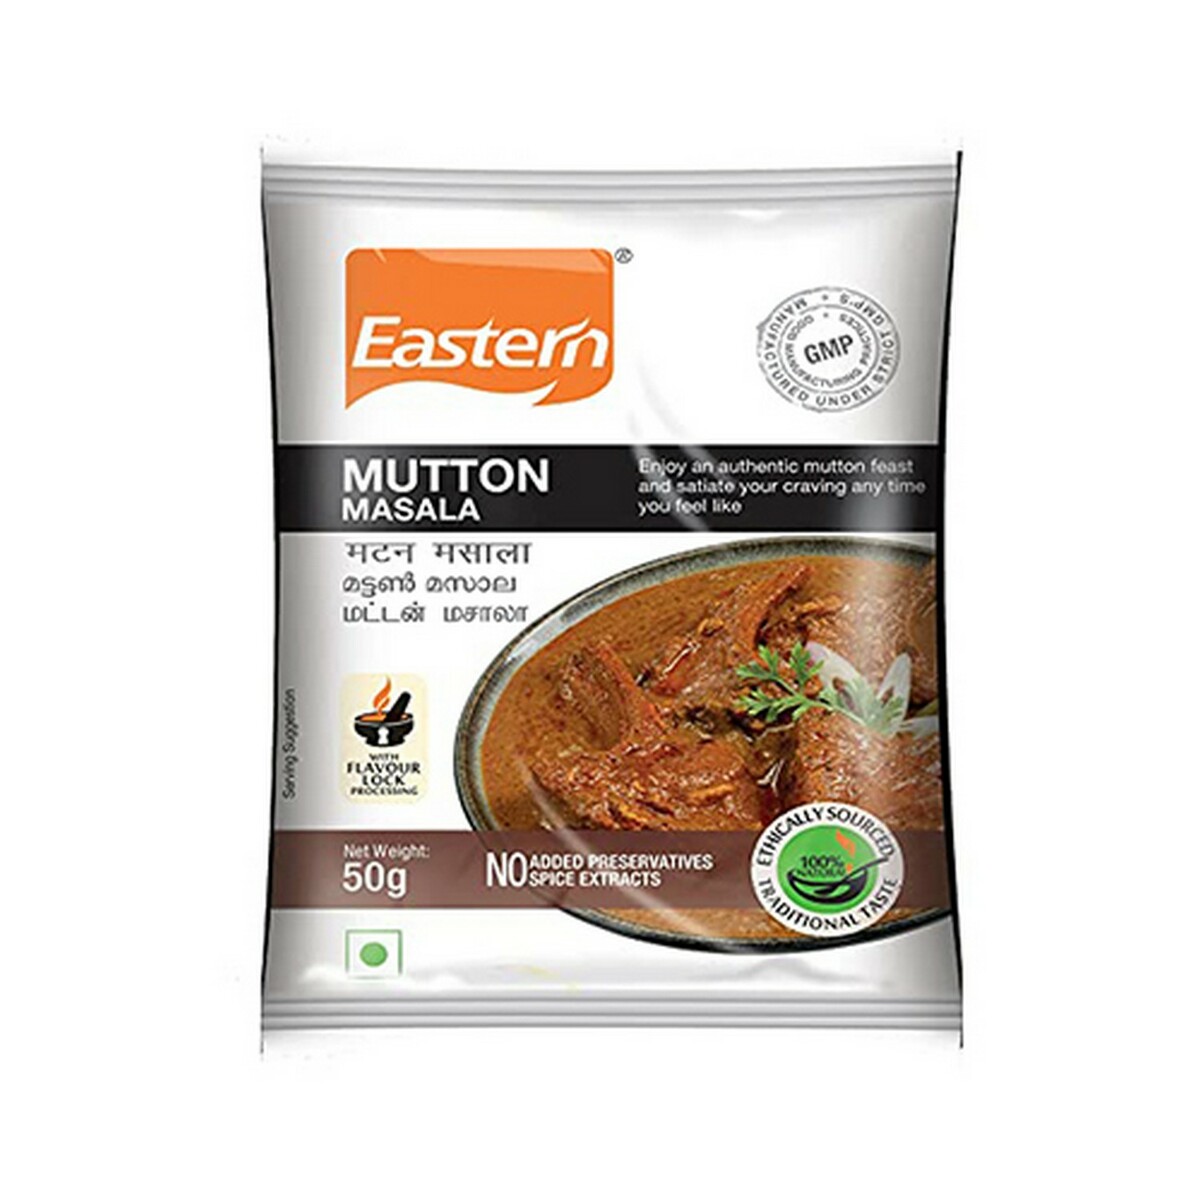 Eastern Mutton Masala Powder 100 g Pouch